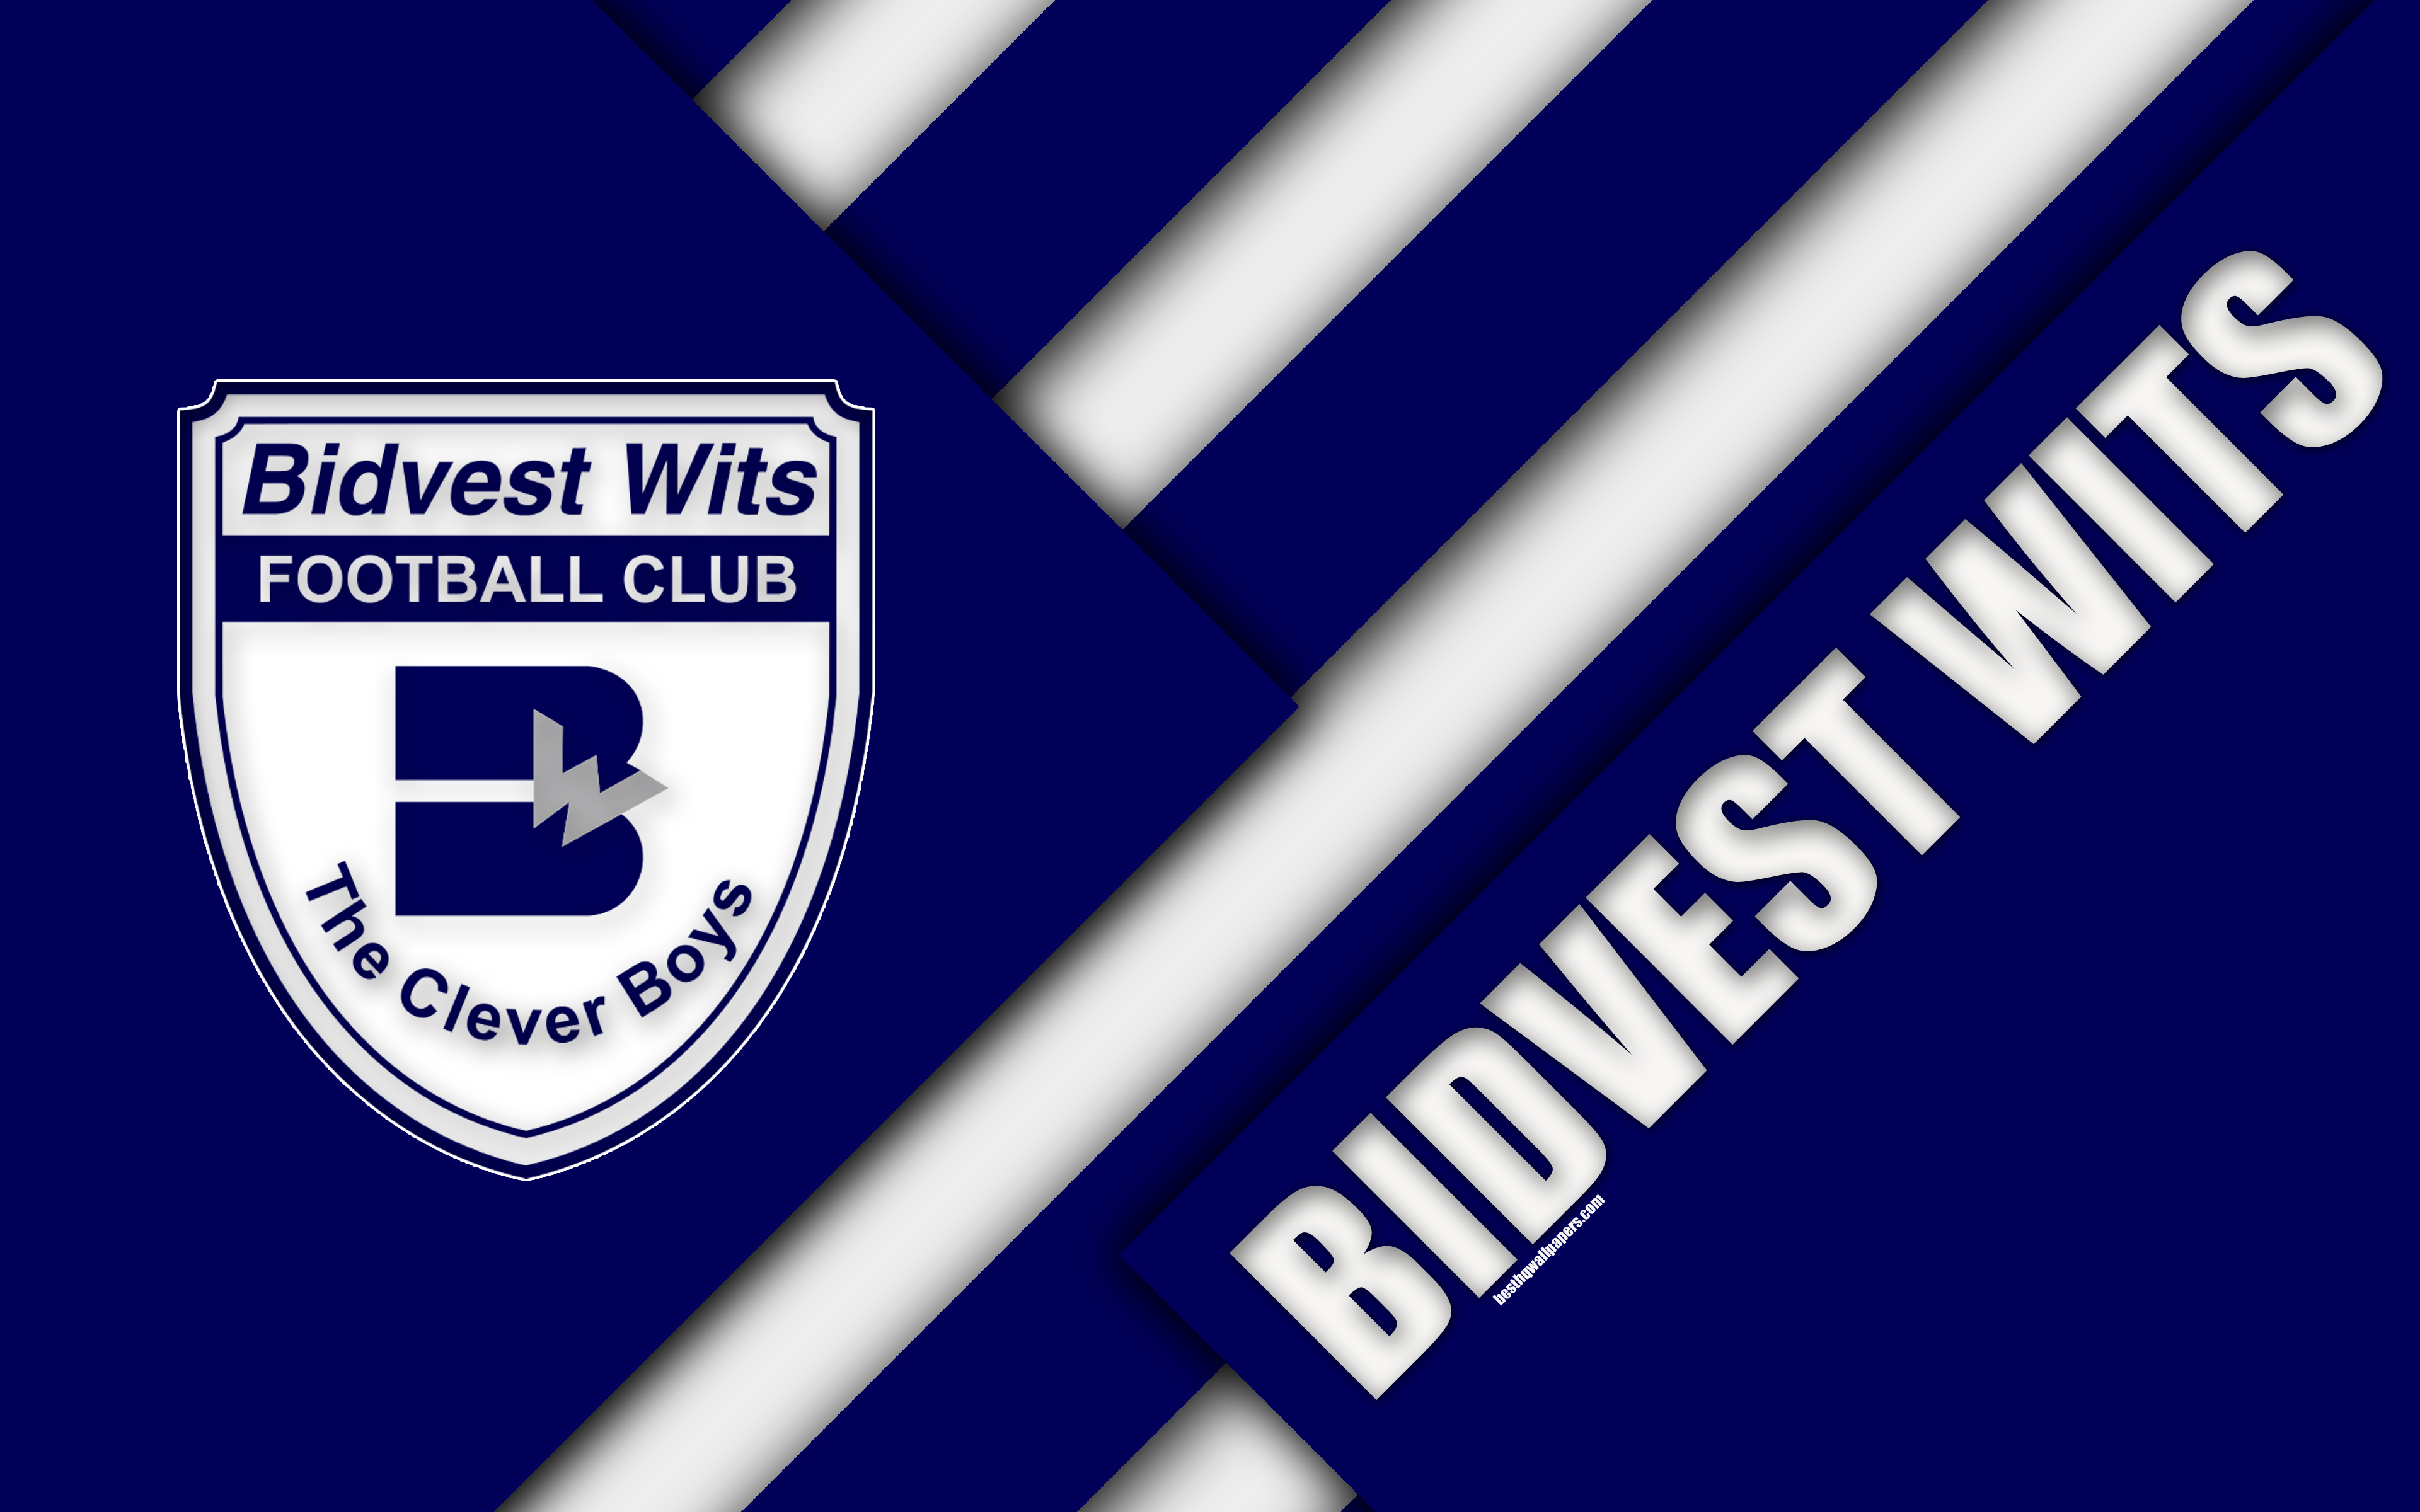 باشگاه فوتبال بیدوست ویتس (Bidvest Wits F.C.)